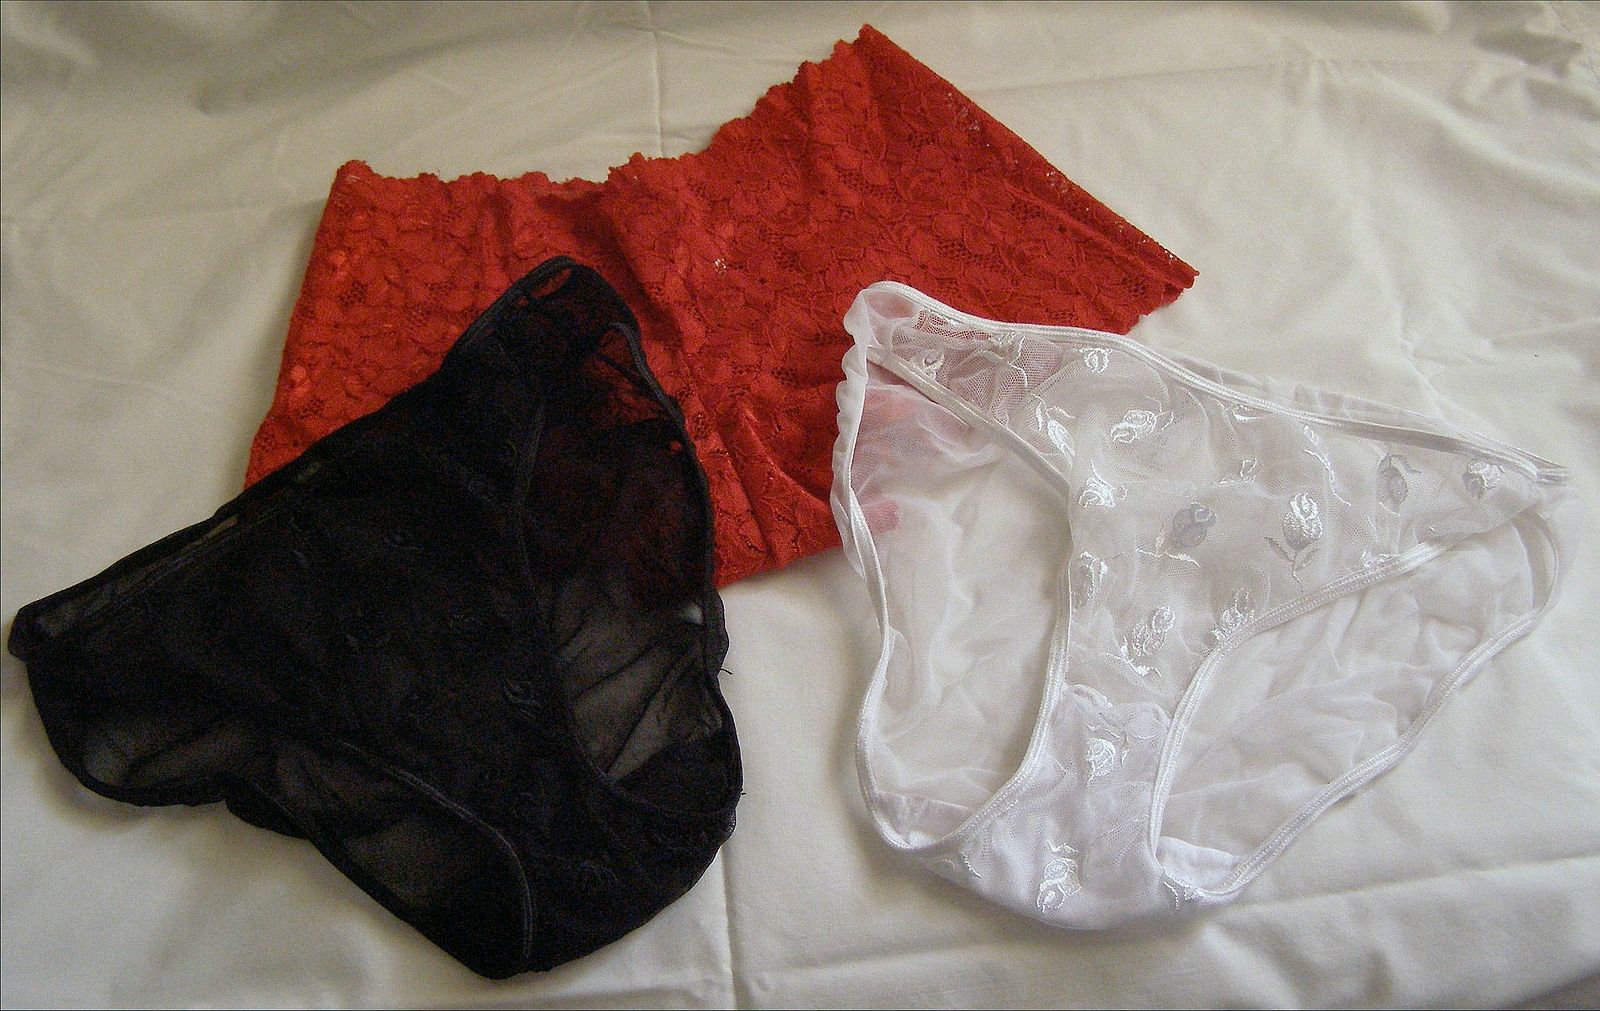 Used panties for sale: Fetish market worth big money to 24yo woman